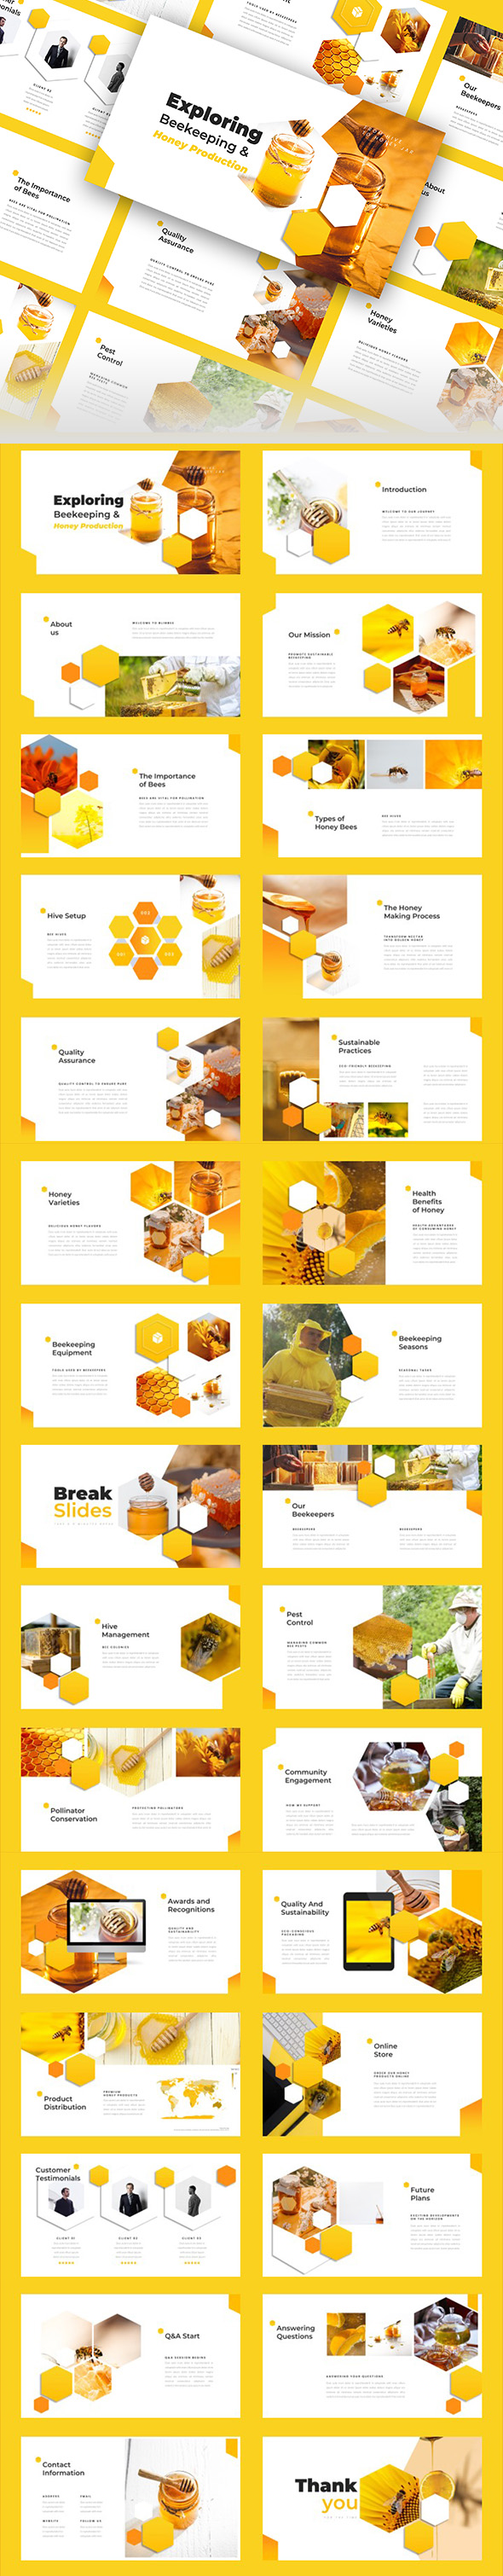 Beekeeping & Honey Production Google Slide